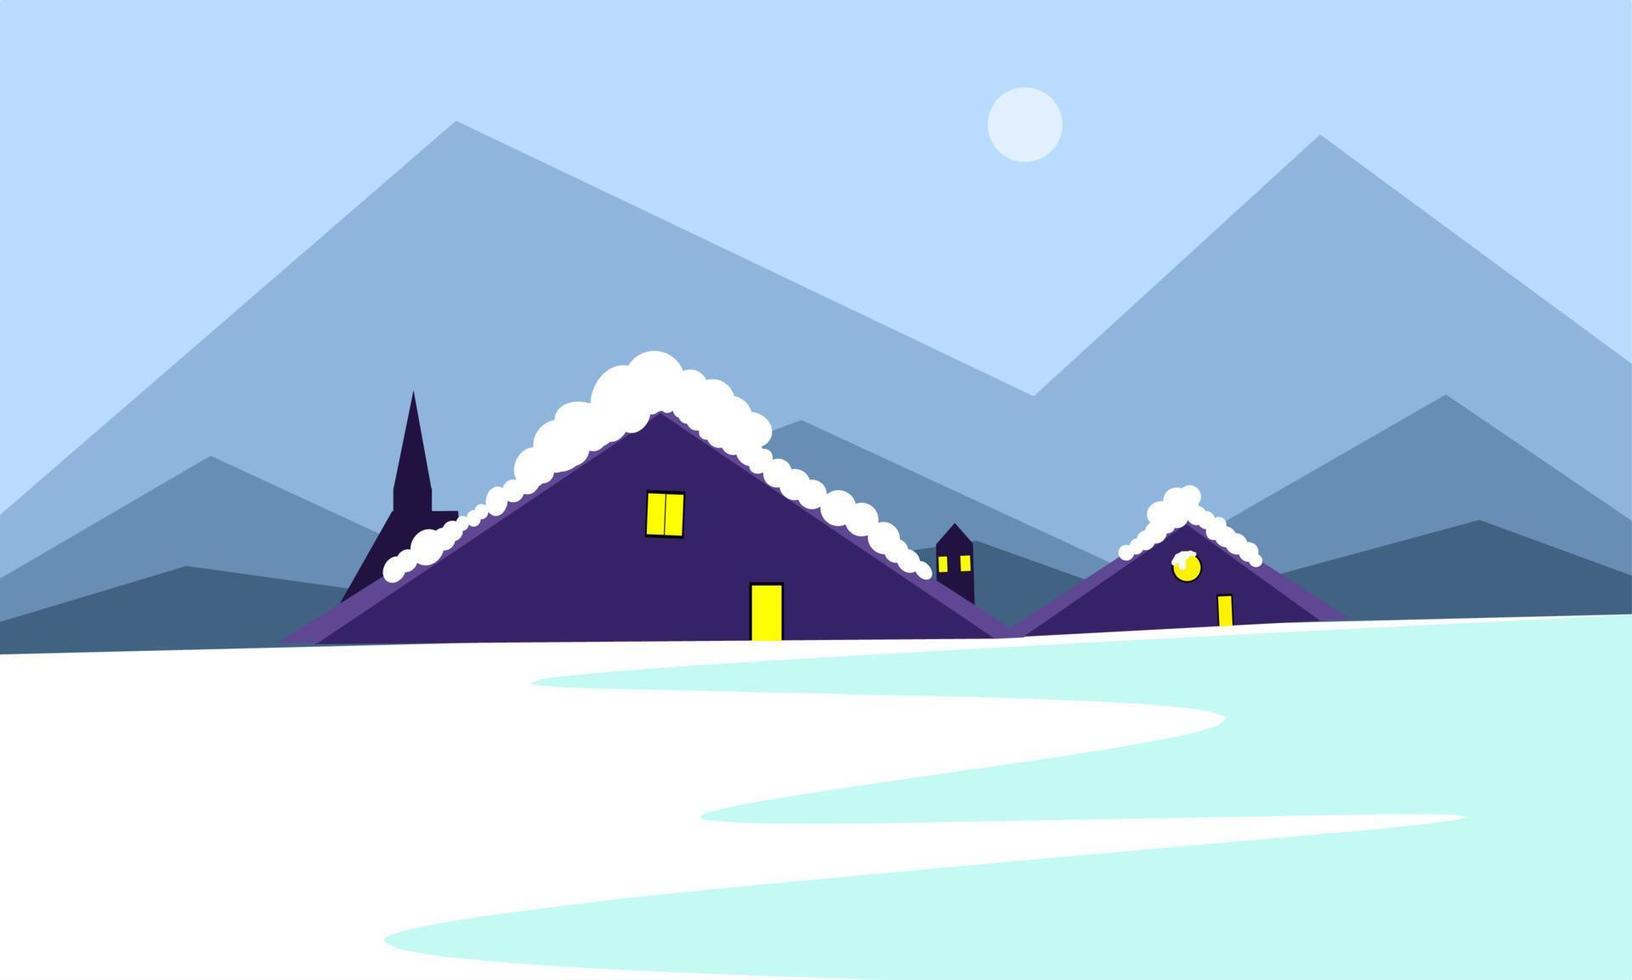 vinter- illustration design, se av de hus i vinter, vinter- landskap illustration vektor